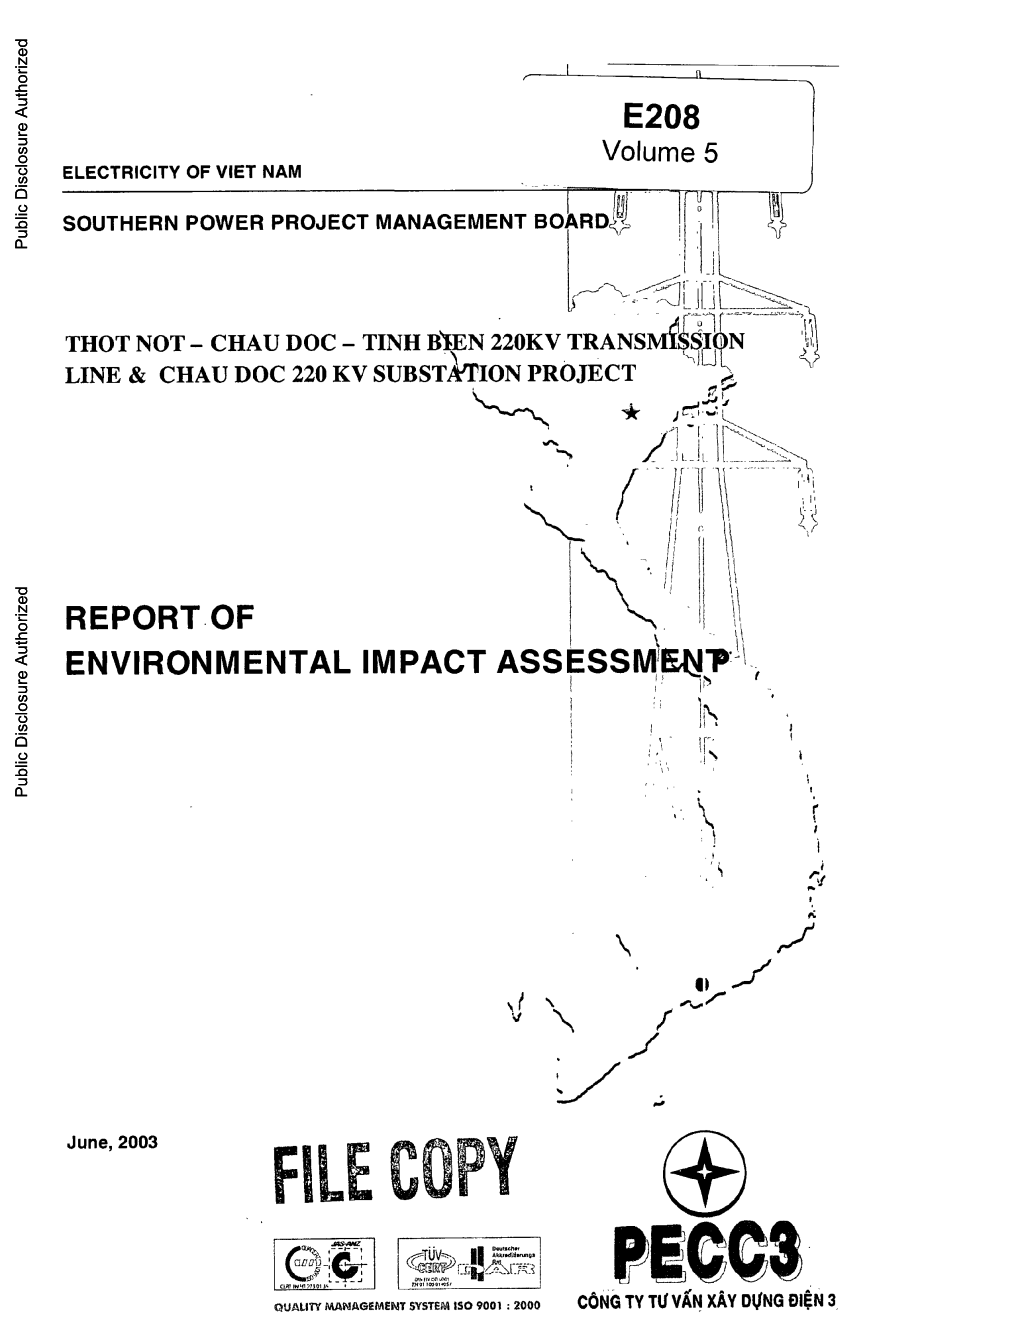 Report of Environmental Impact Assessment